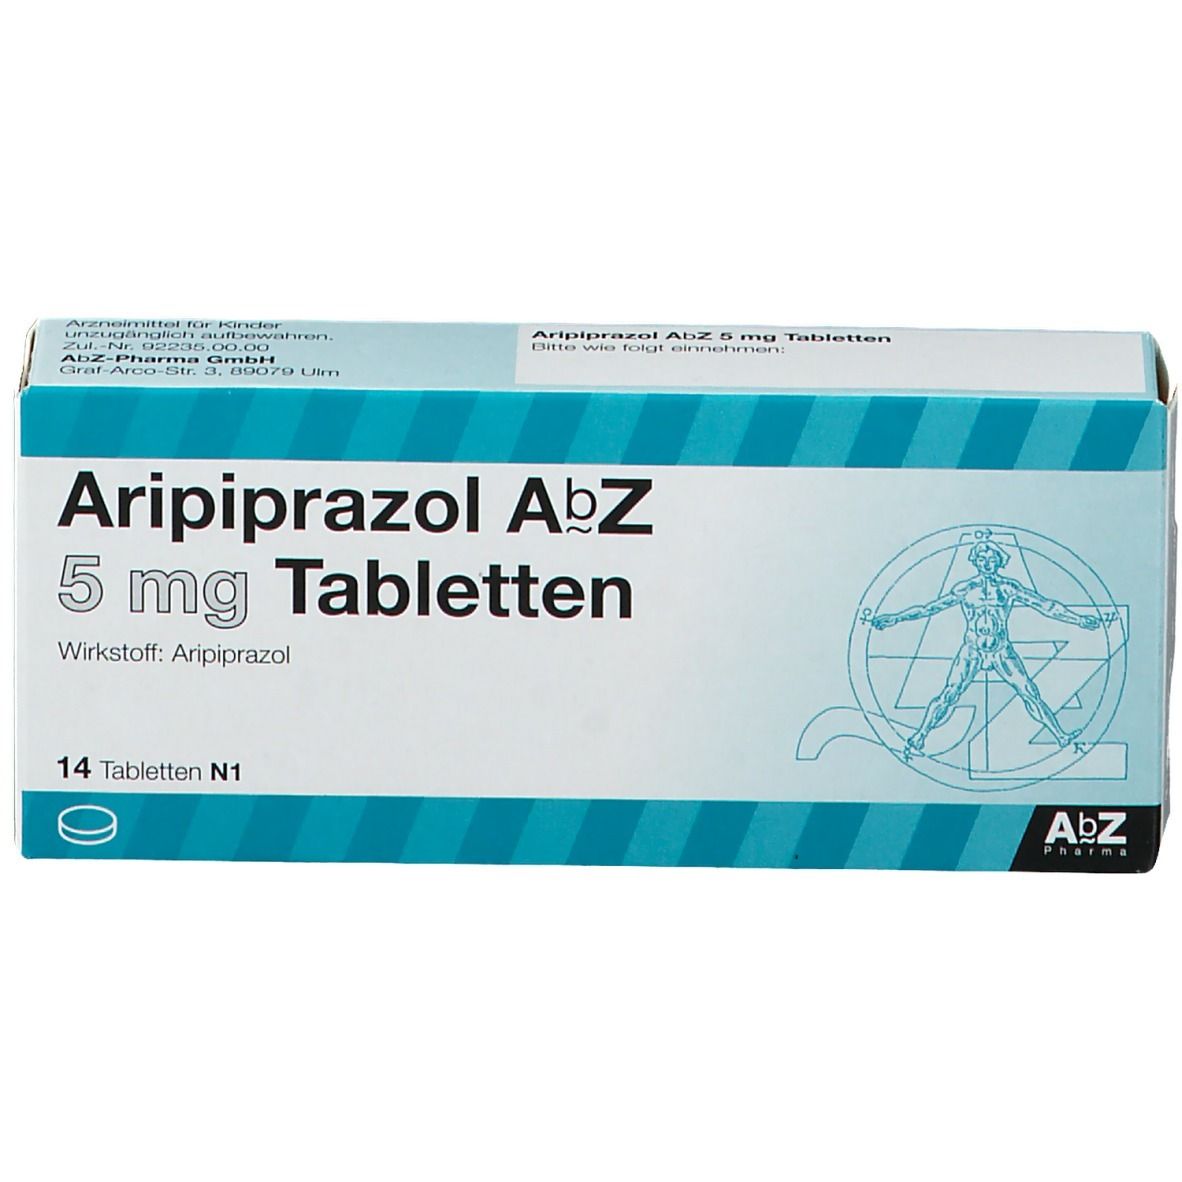 Aripiprazol AbZ 5 mg